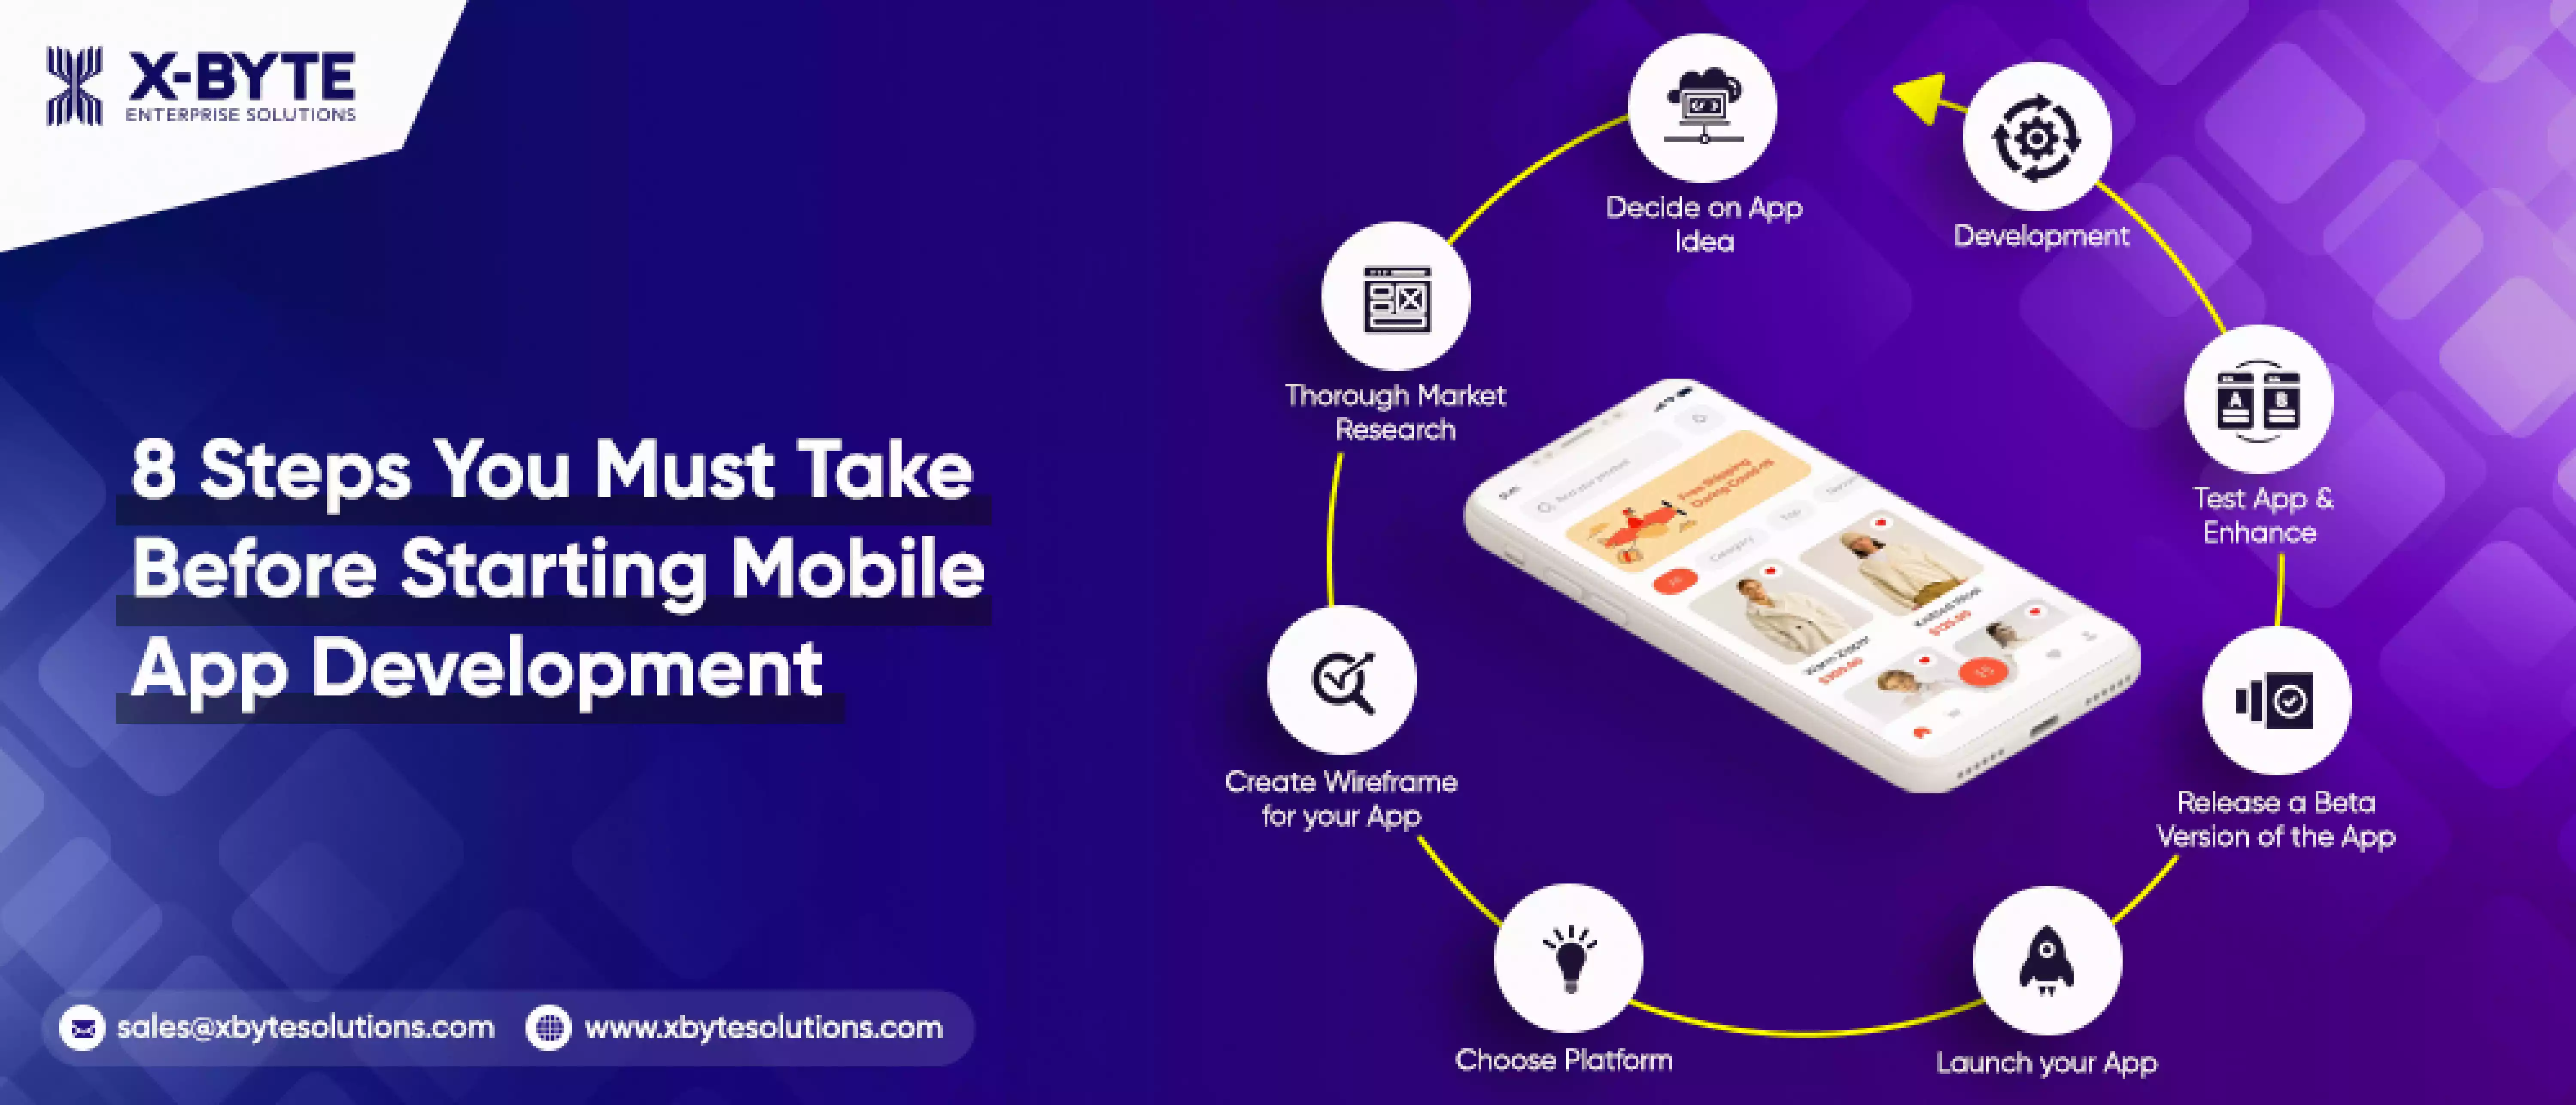 8 Steps You Must Take Before Starting Mobile App Development